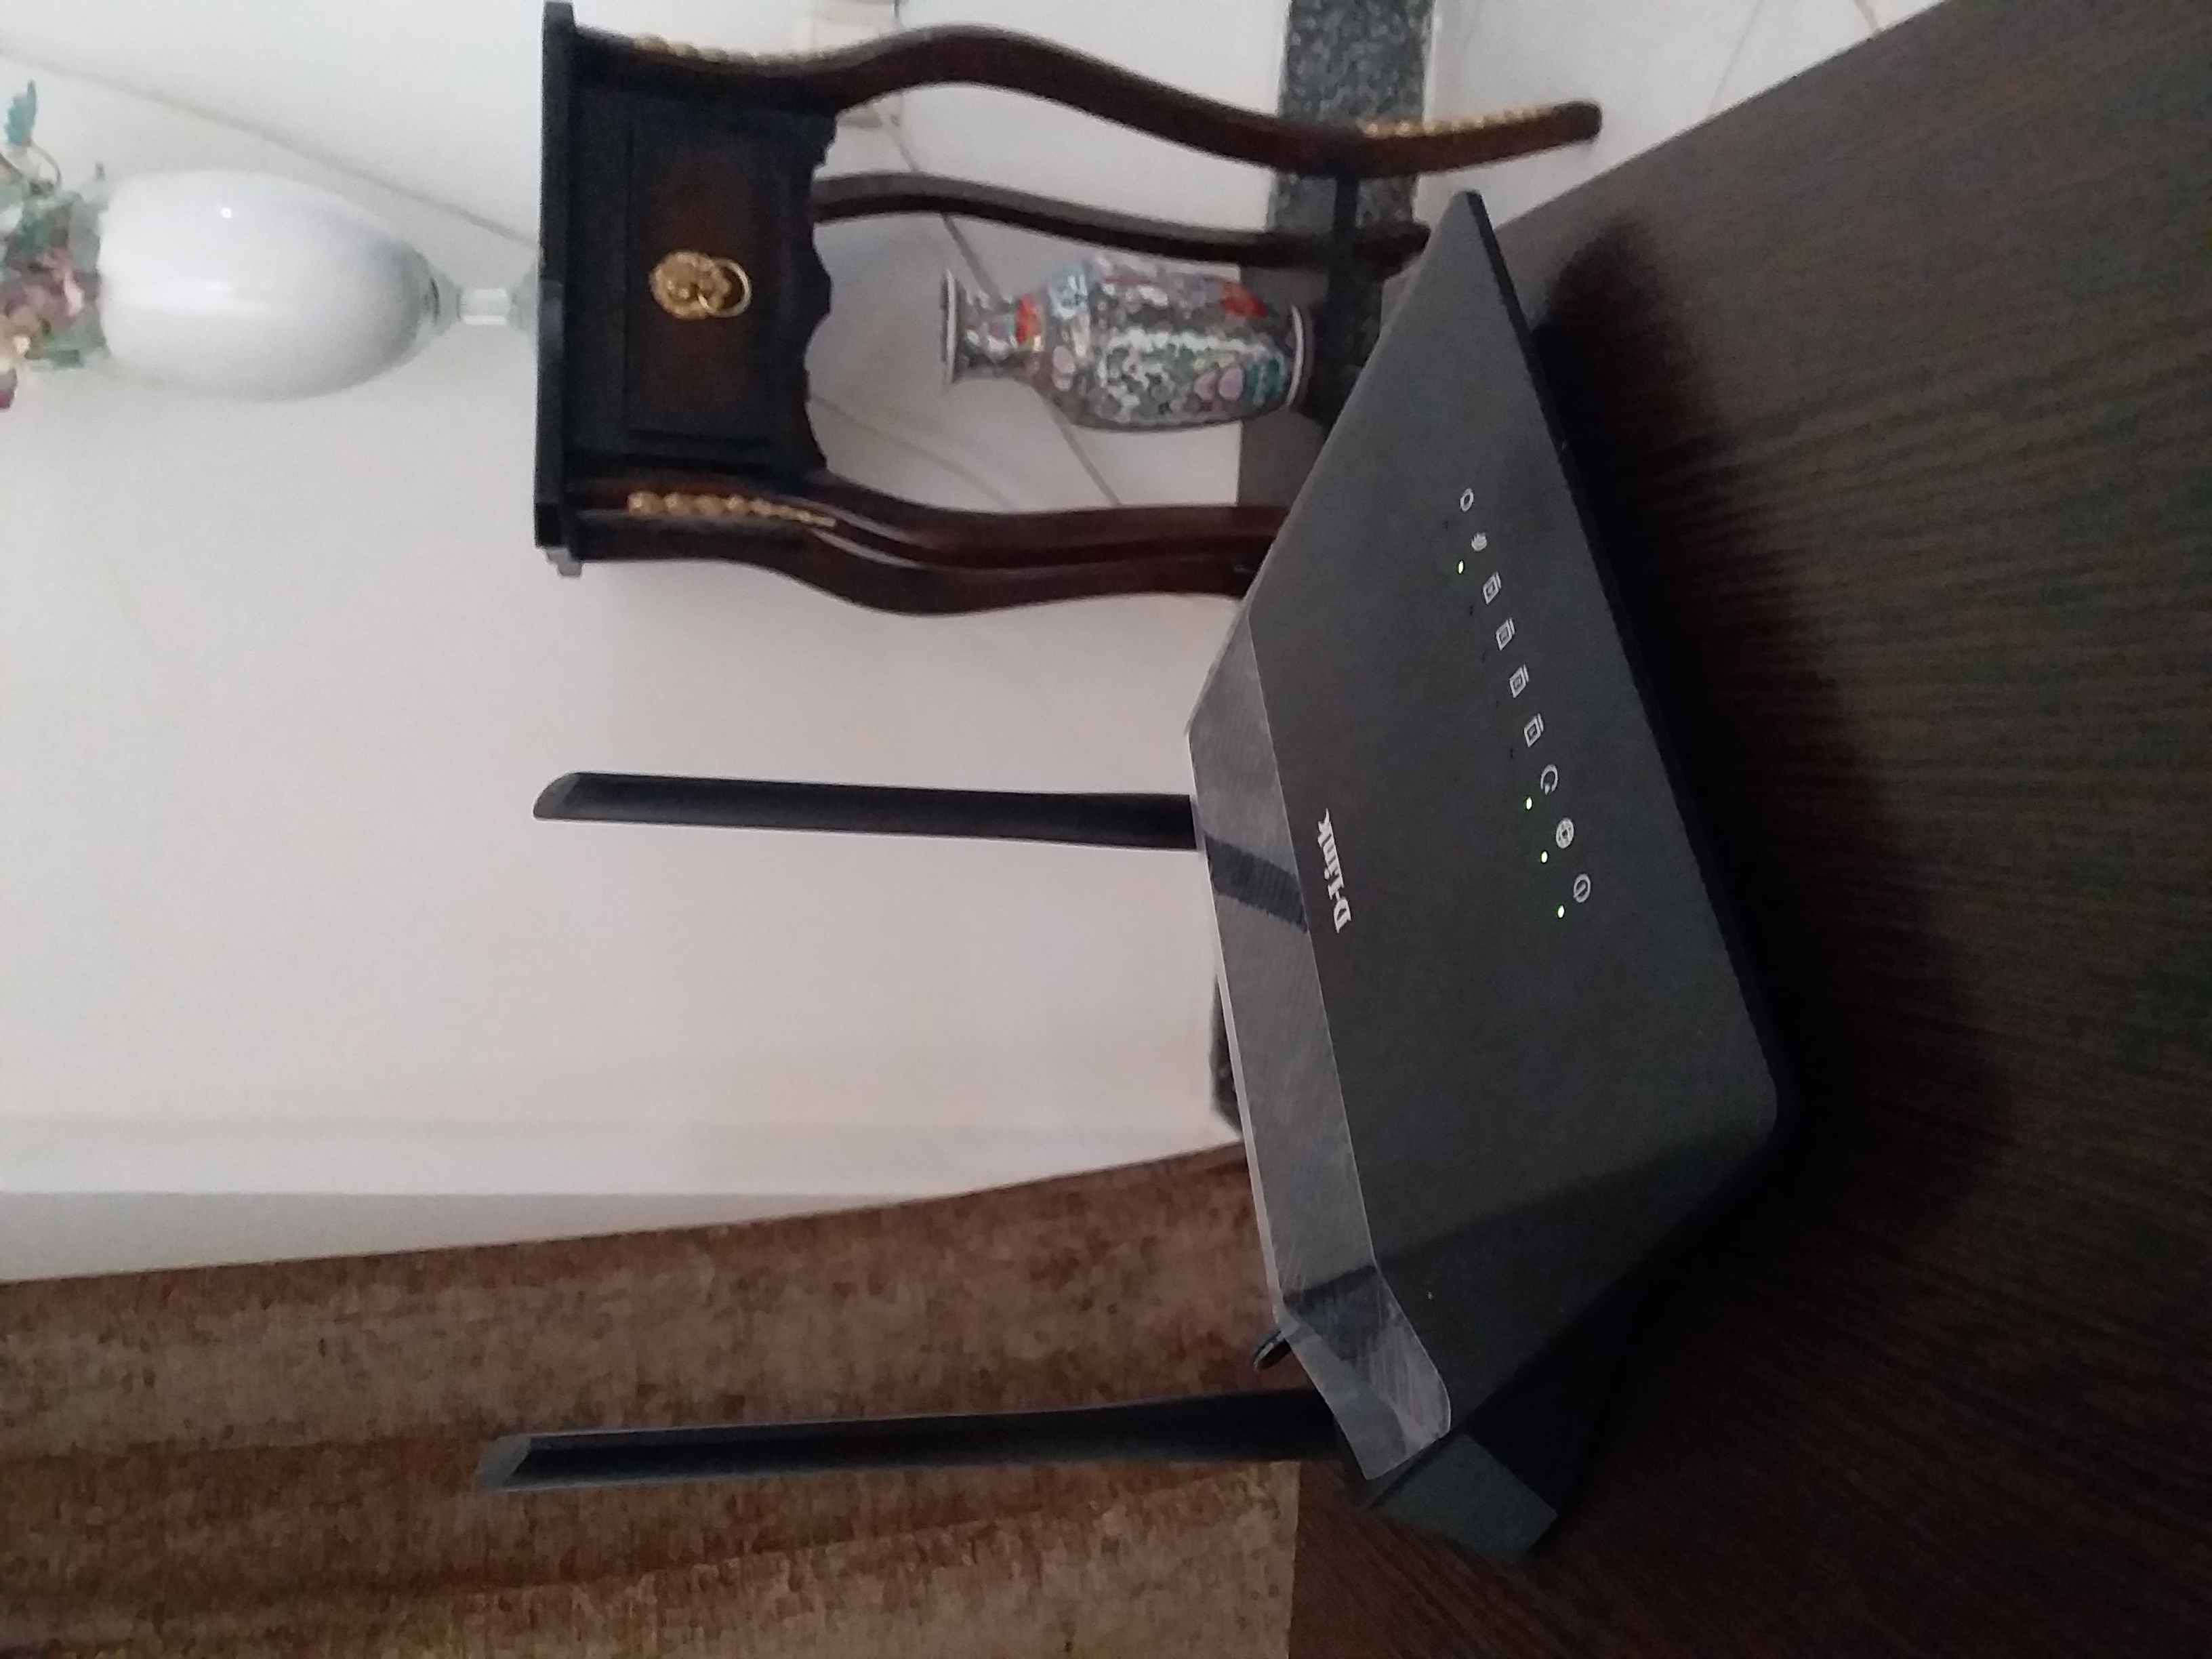 مودم روتر بی سیم ADSL2 Plus و VDSL2 دی لینک مدل DSL-224 NEW